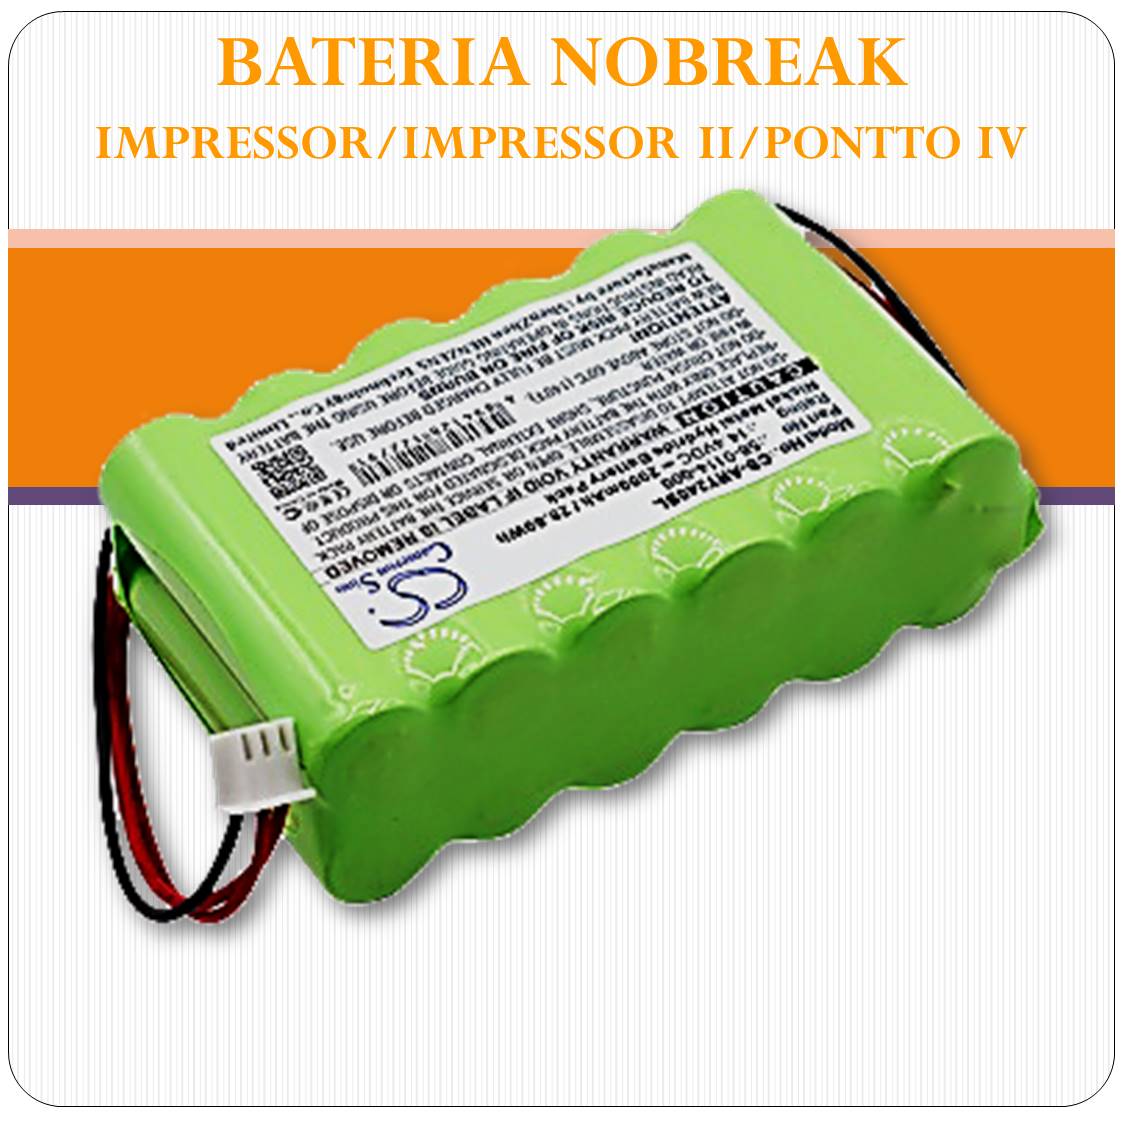 Bateria Nobreak Impressor - Impressor II - Pontto IV